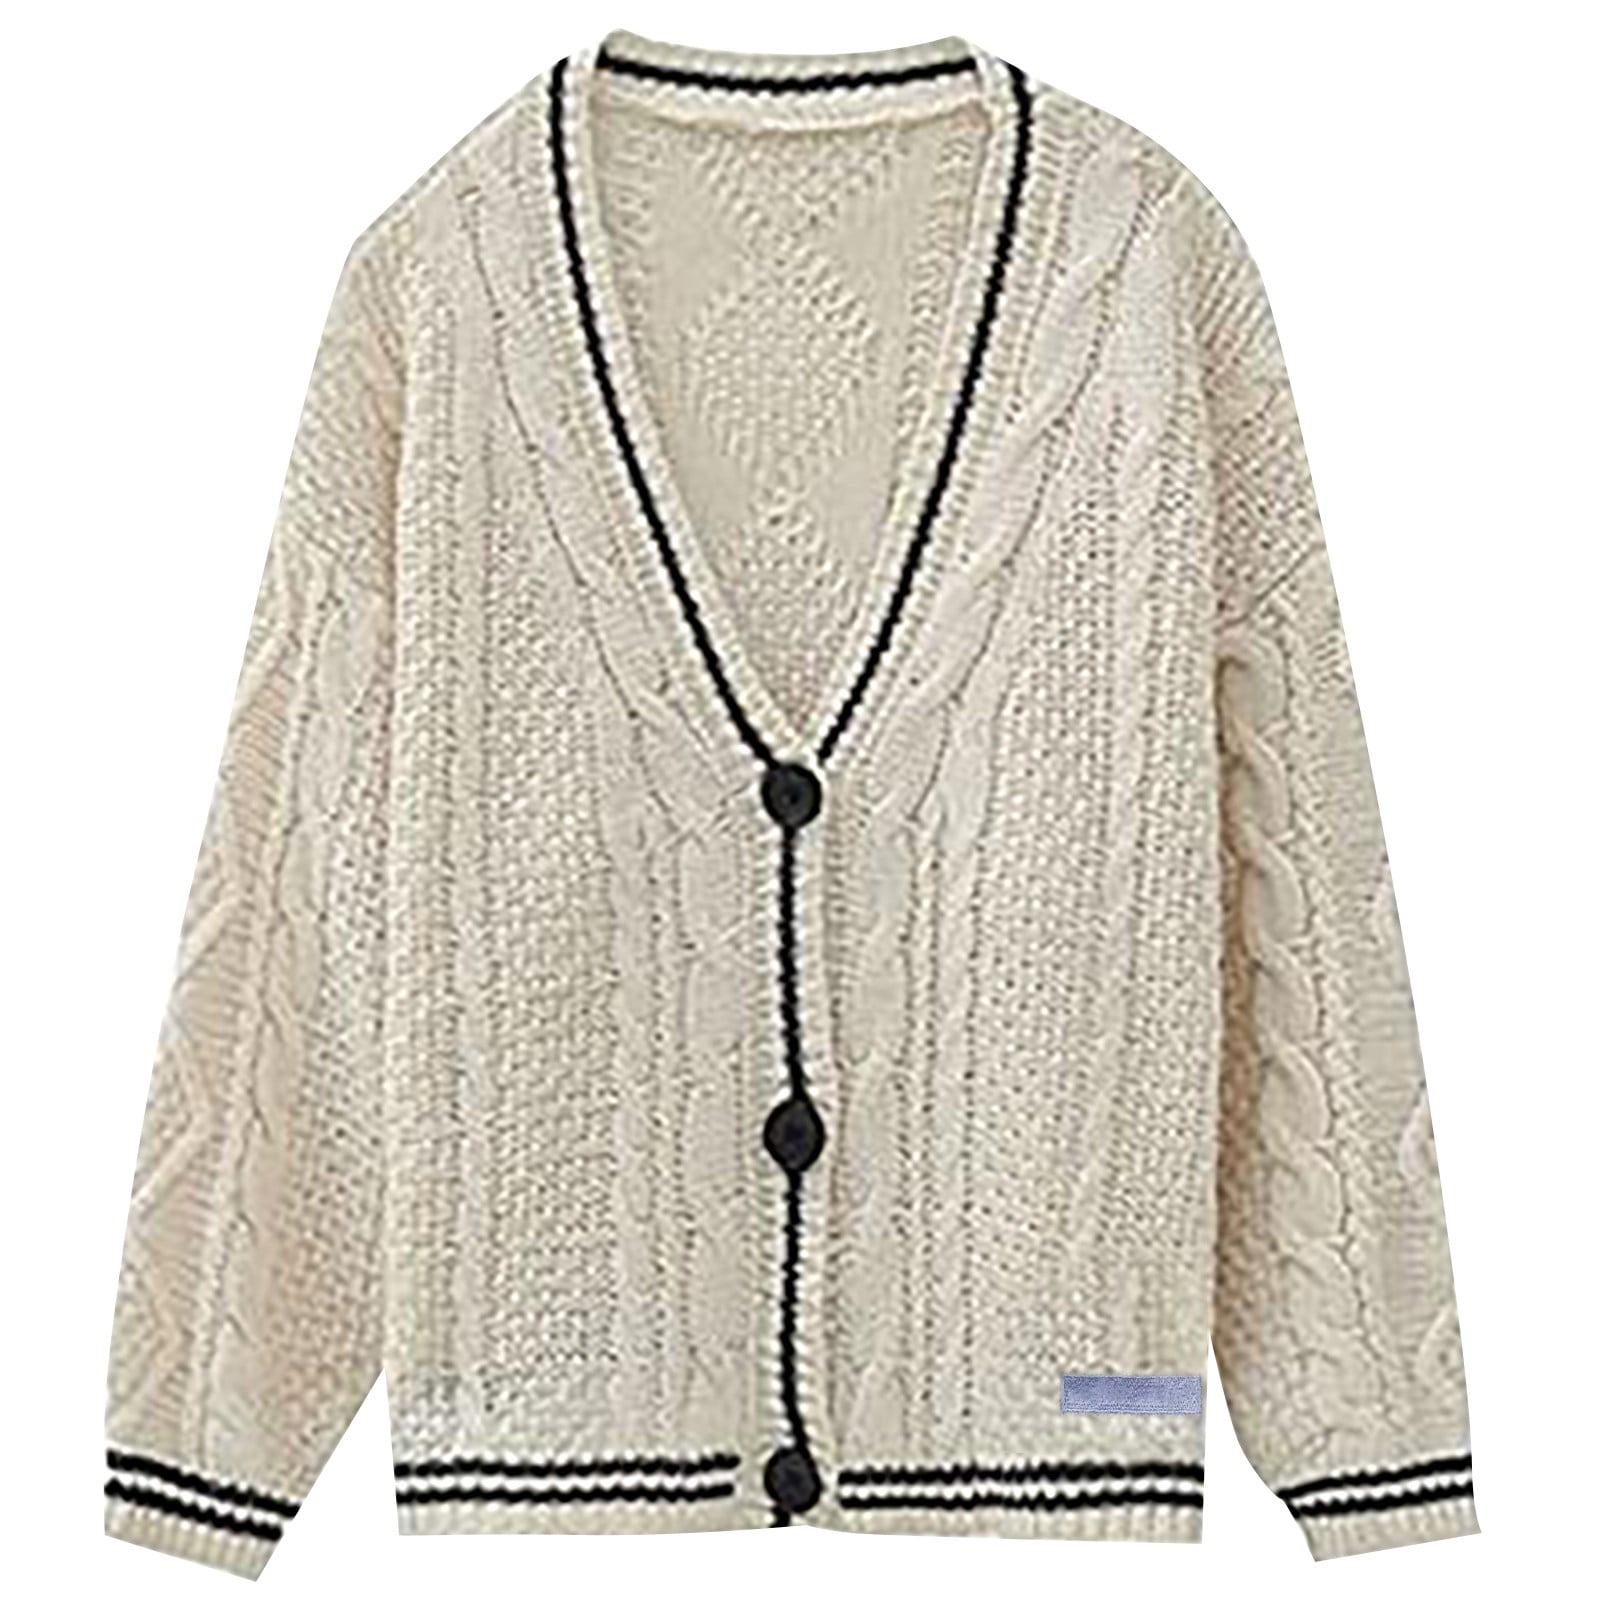 Shiusina Women's Long Sleeves Cardigan Carabiner Open Front Casual  Lightweight Knit Batwing Sweater Coat Beige Beige L - Walmart.com